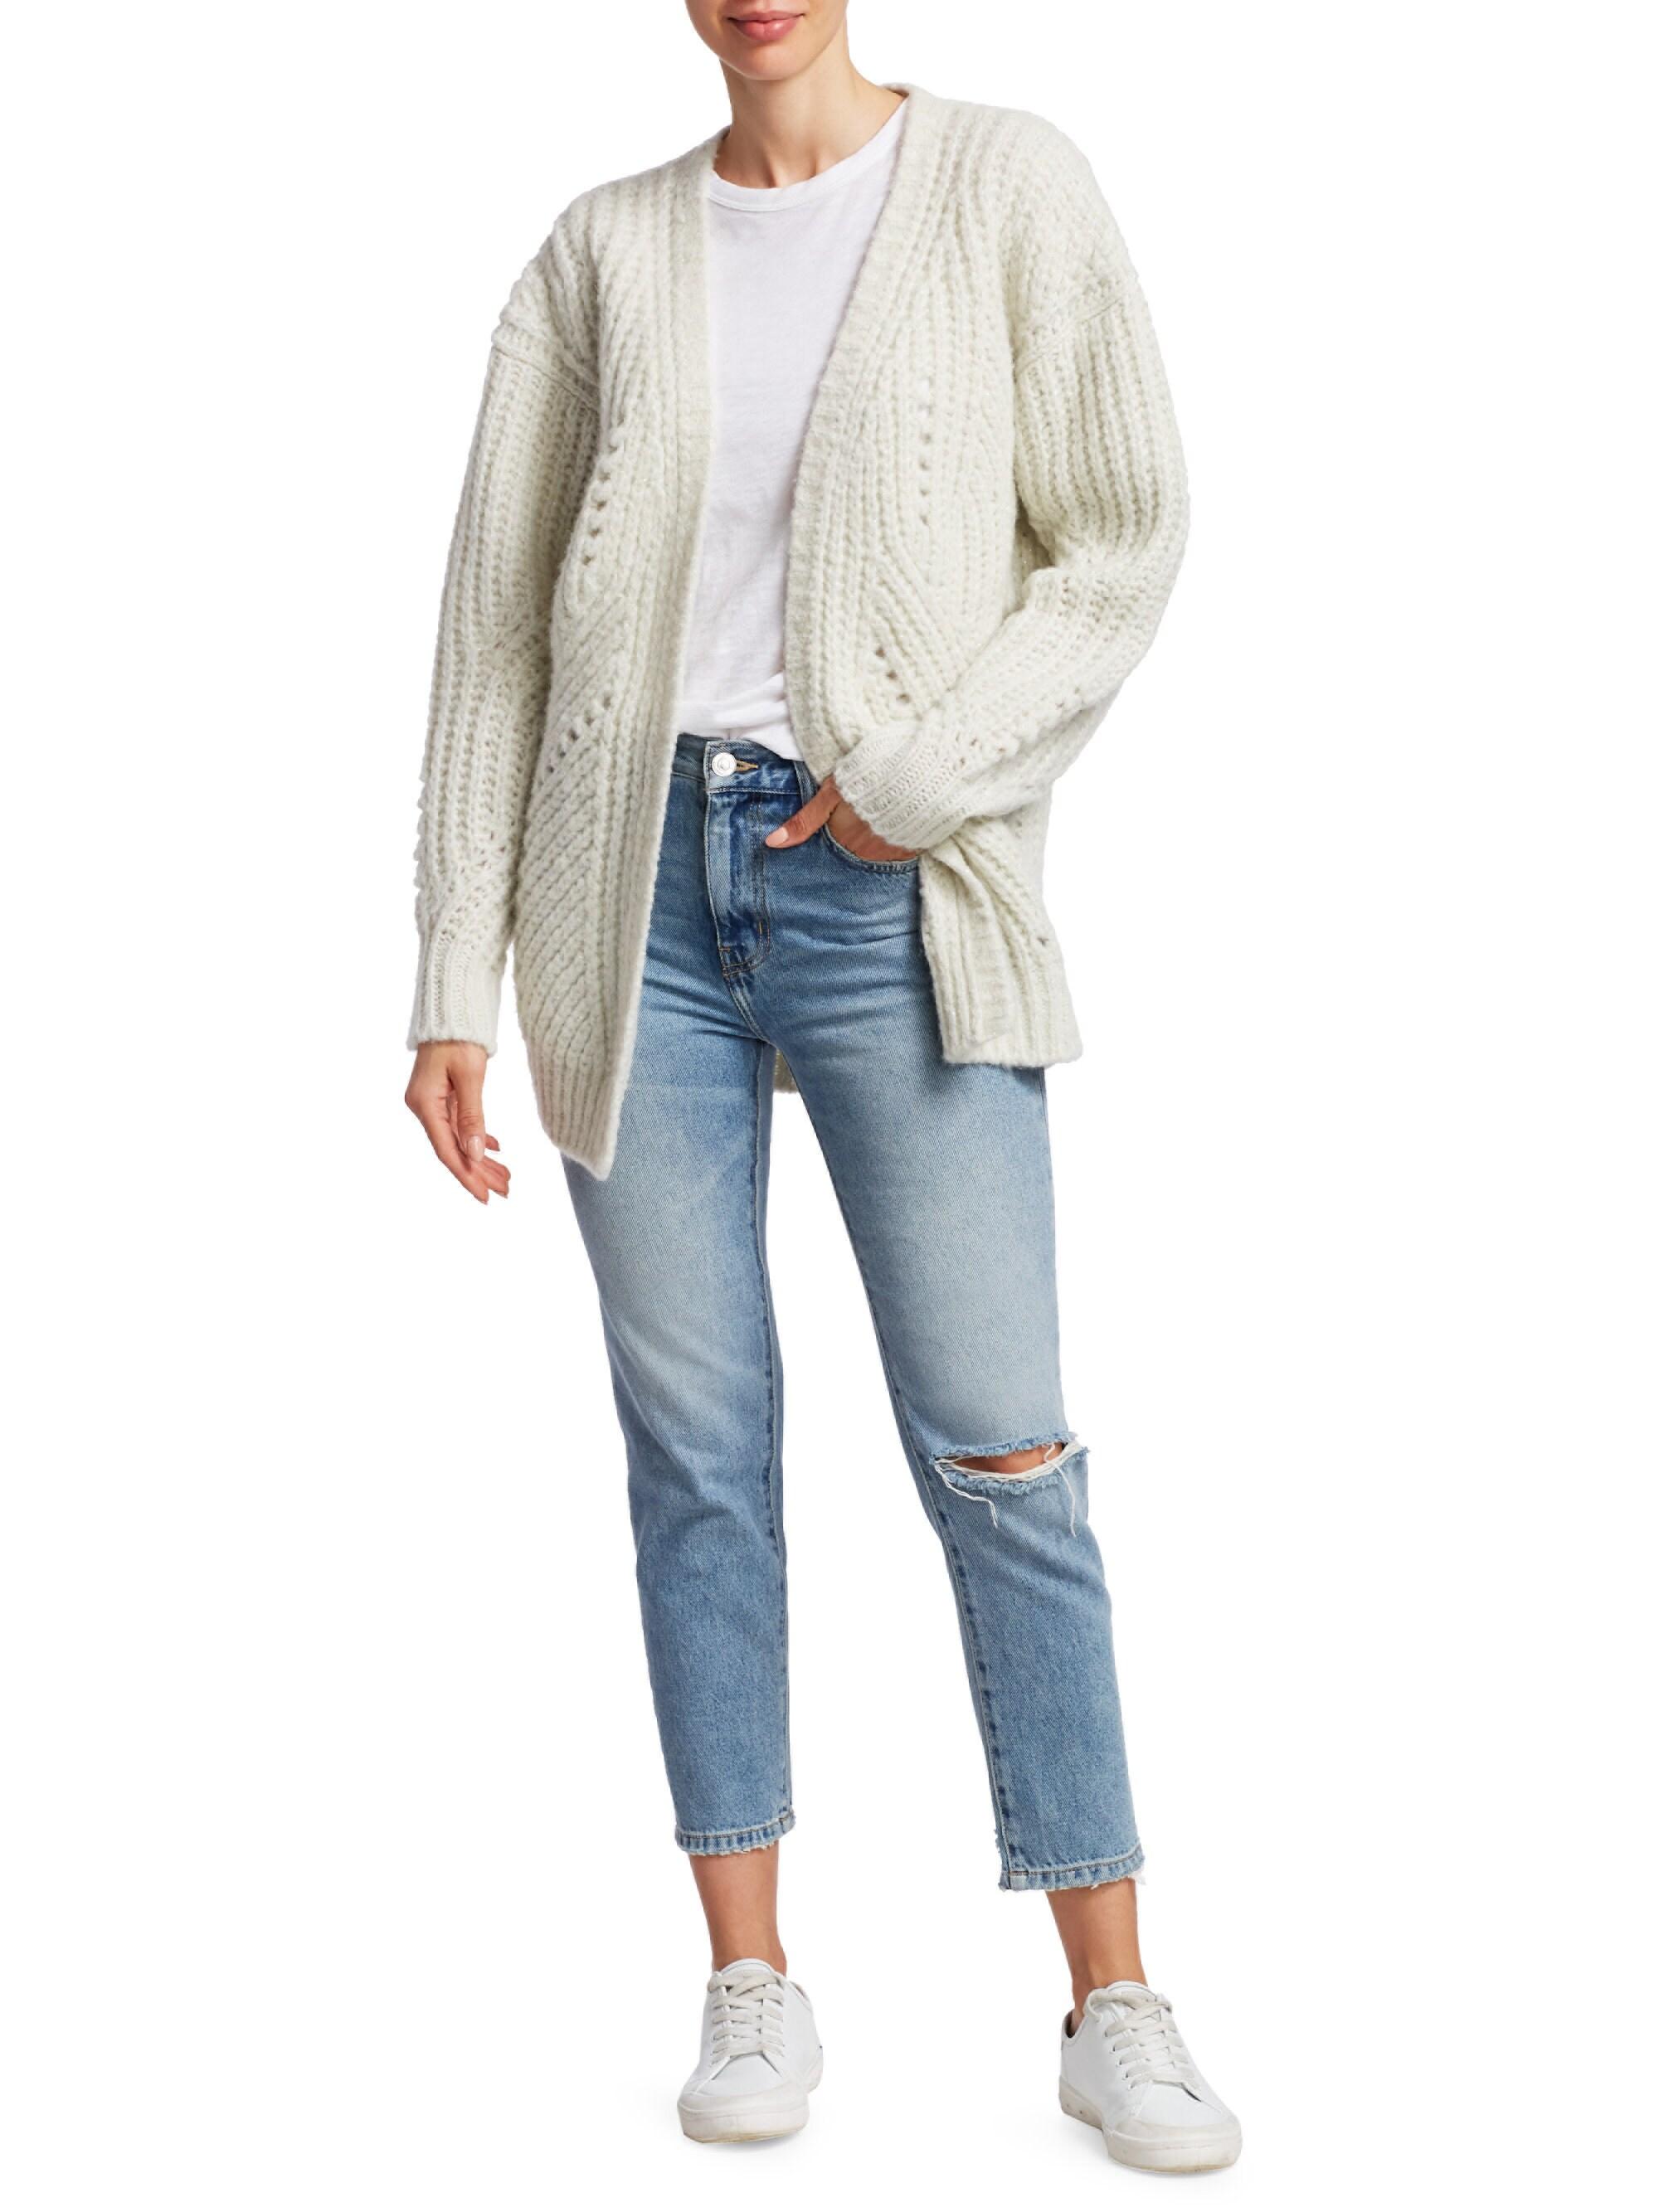 IRO Wool Vesna Chunky Knit Cardigan Sweater in White - Lyst